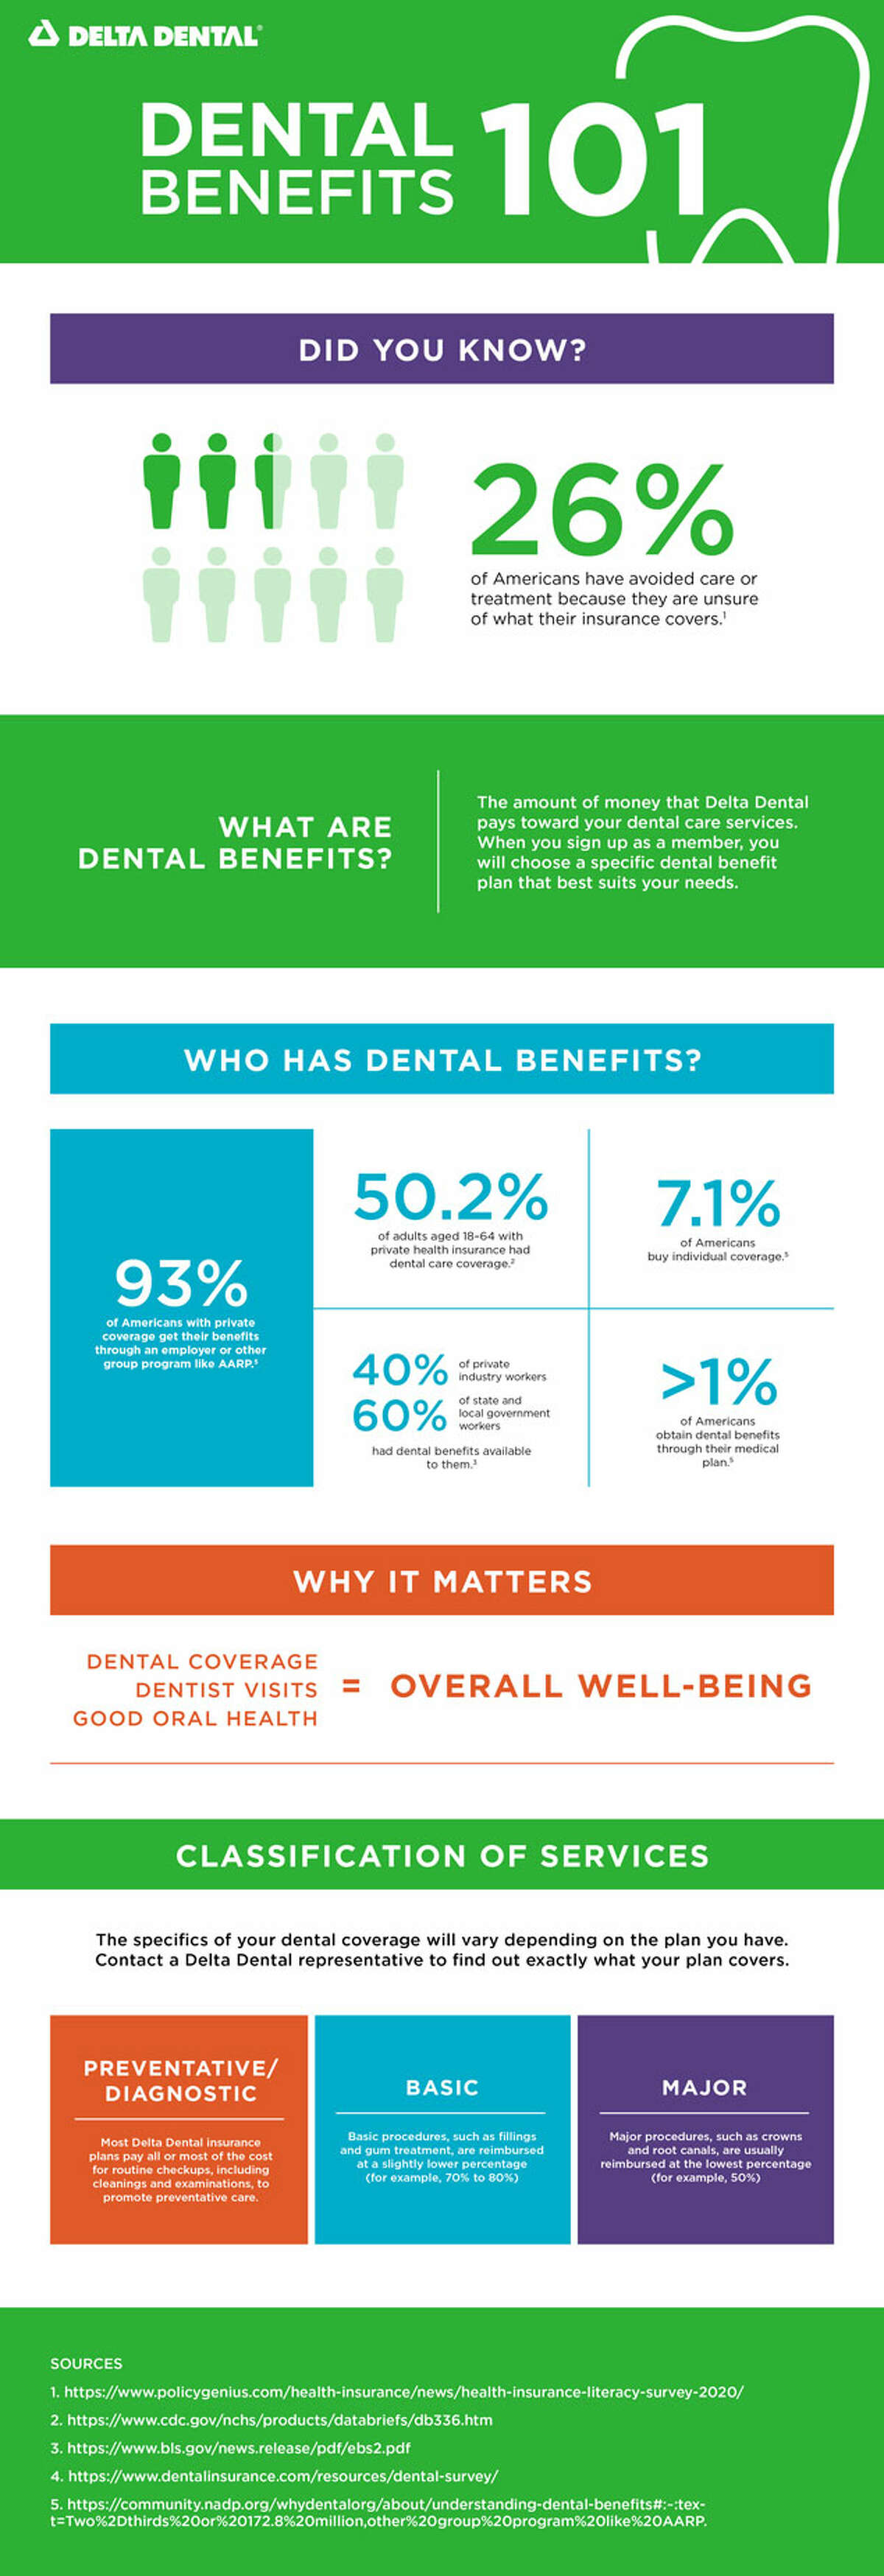 Dental Benefits 101